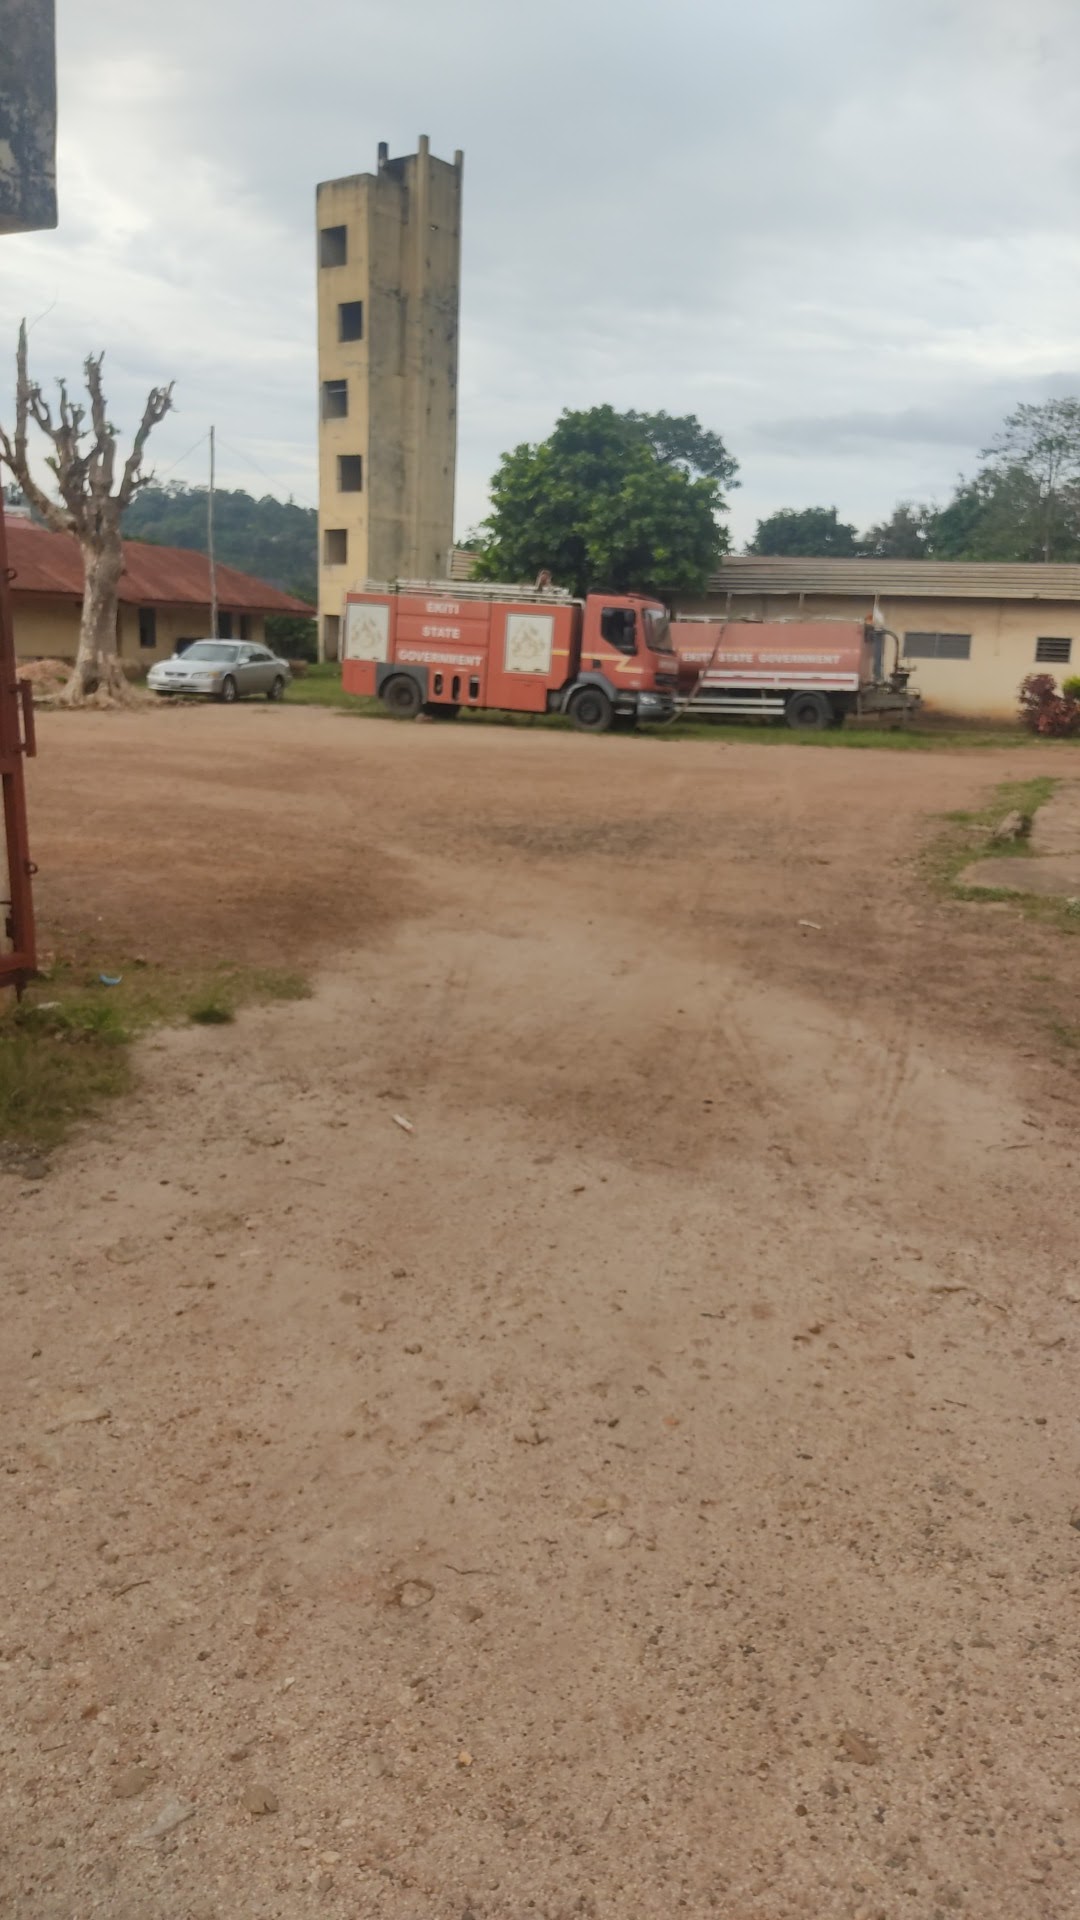 Ekiti State Fire Service Headquarters